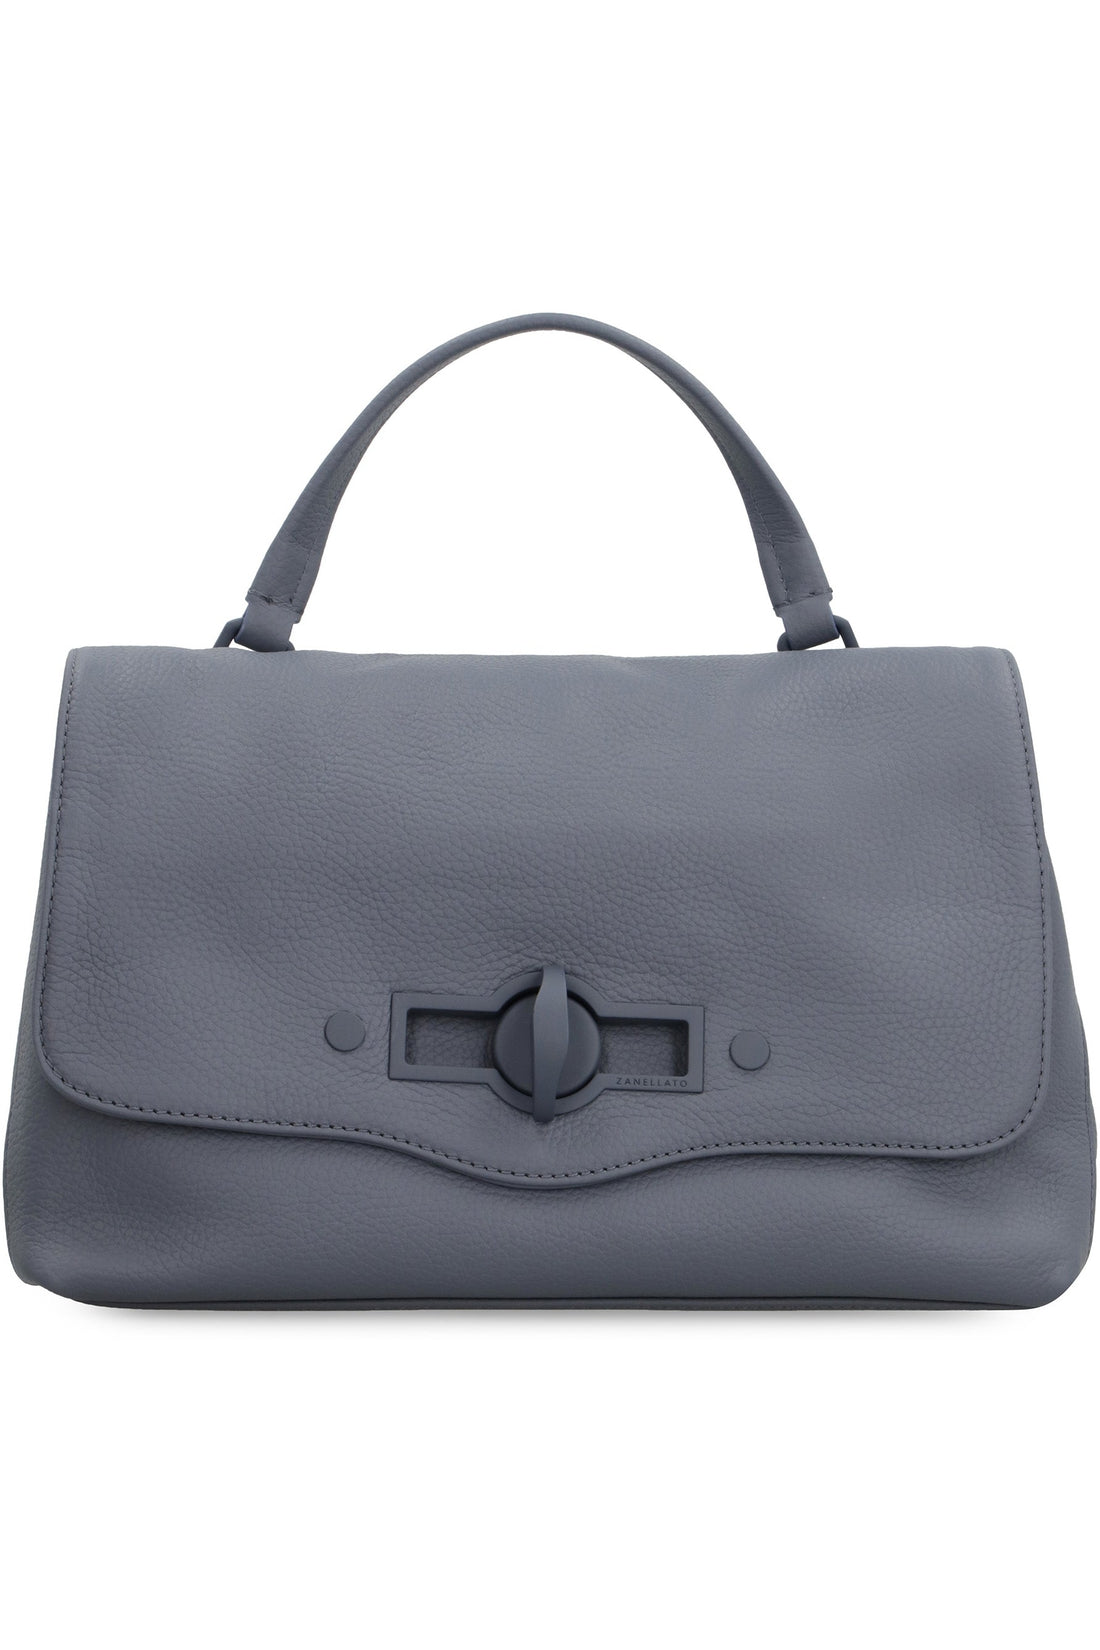 Zanellato-OUTLET-SALE-Postina S leather bag-ARCHIVIST